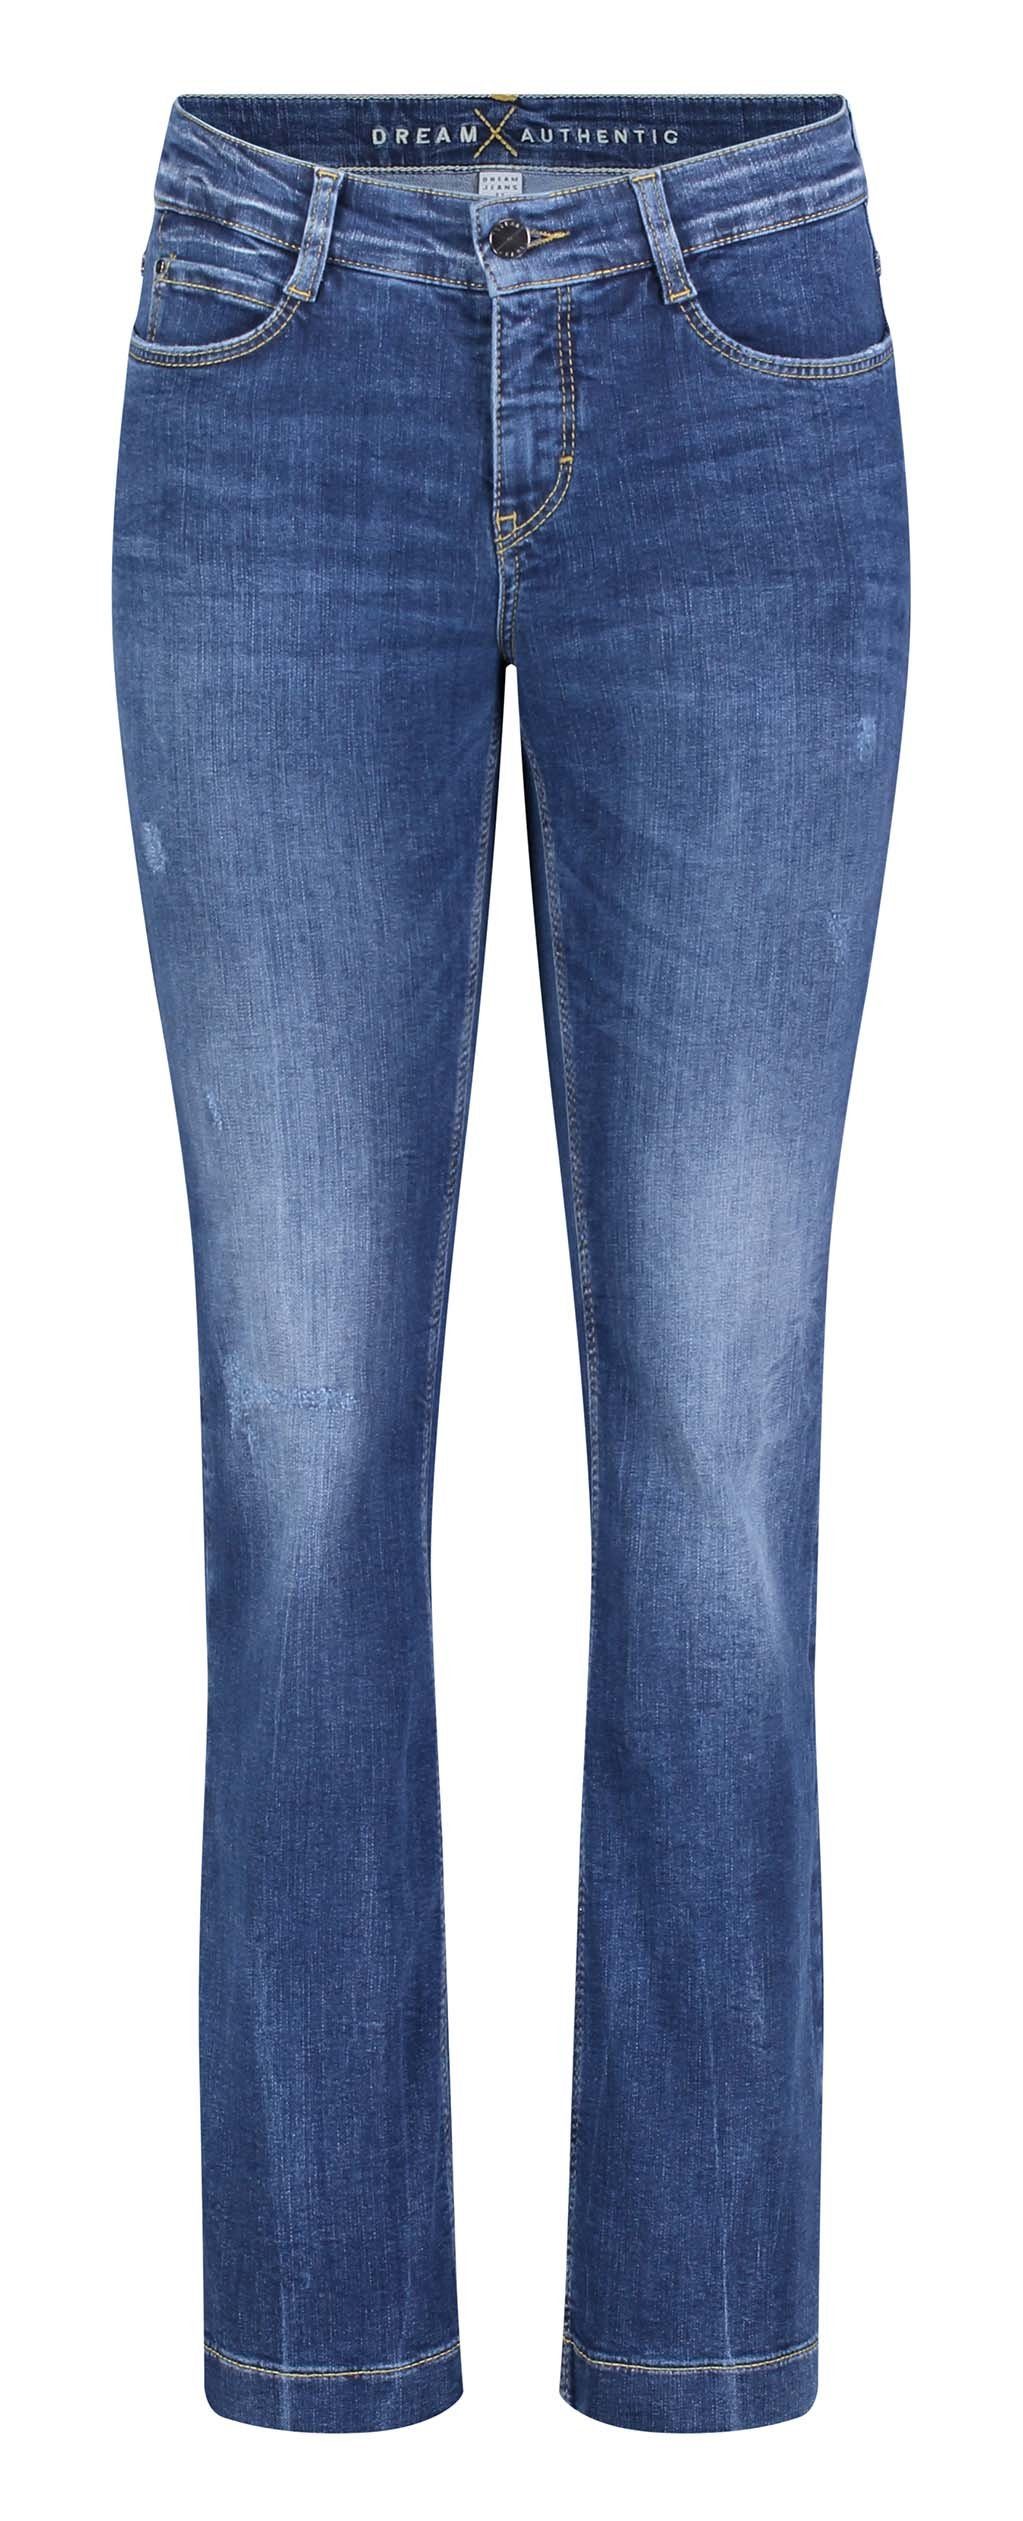 Damen Jeans MAC Stretch-Jeans MAC DREAM BOOT mid blue authentic wash 5429-90-035